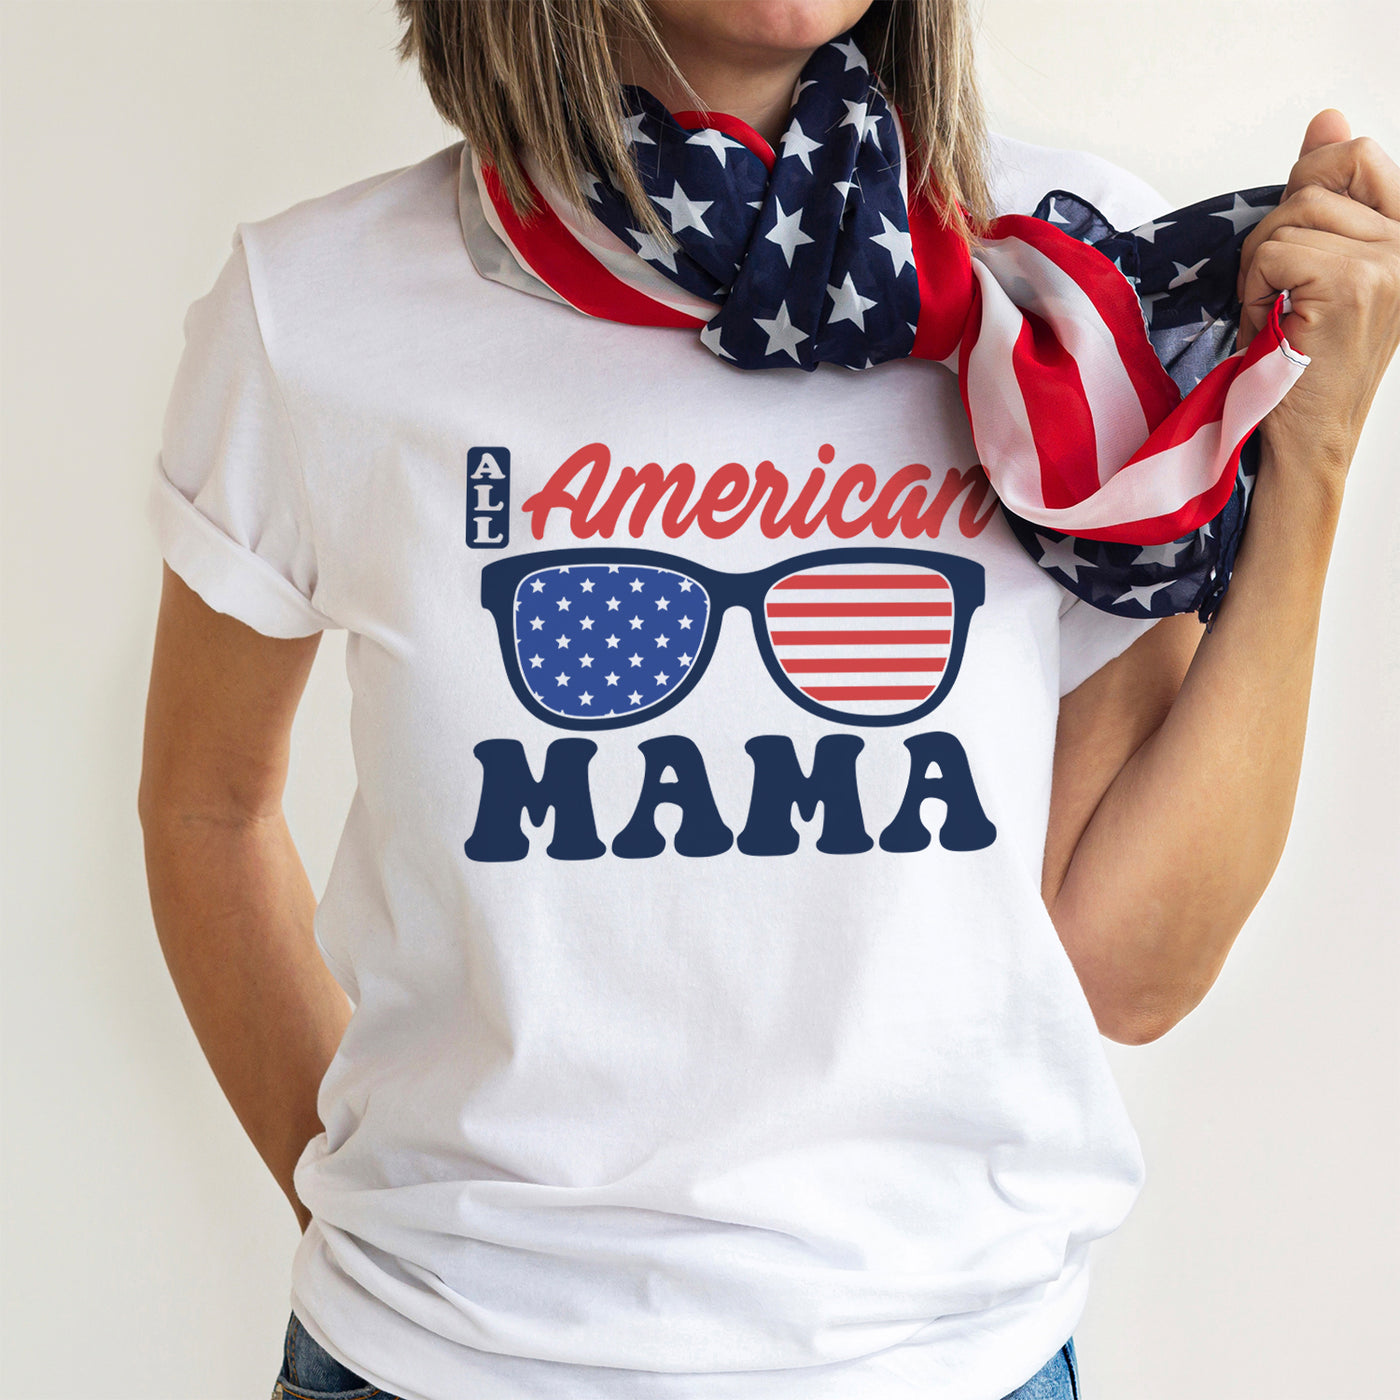 All American T-shirt